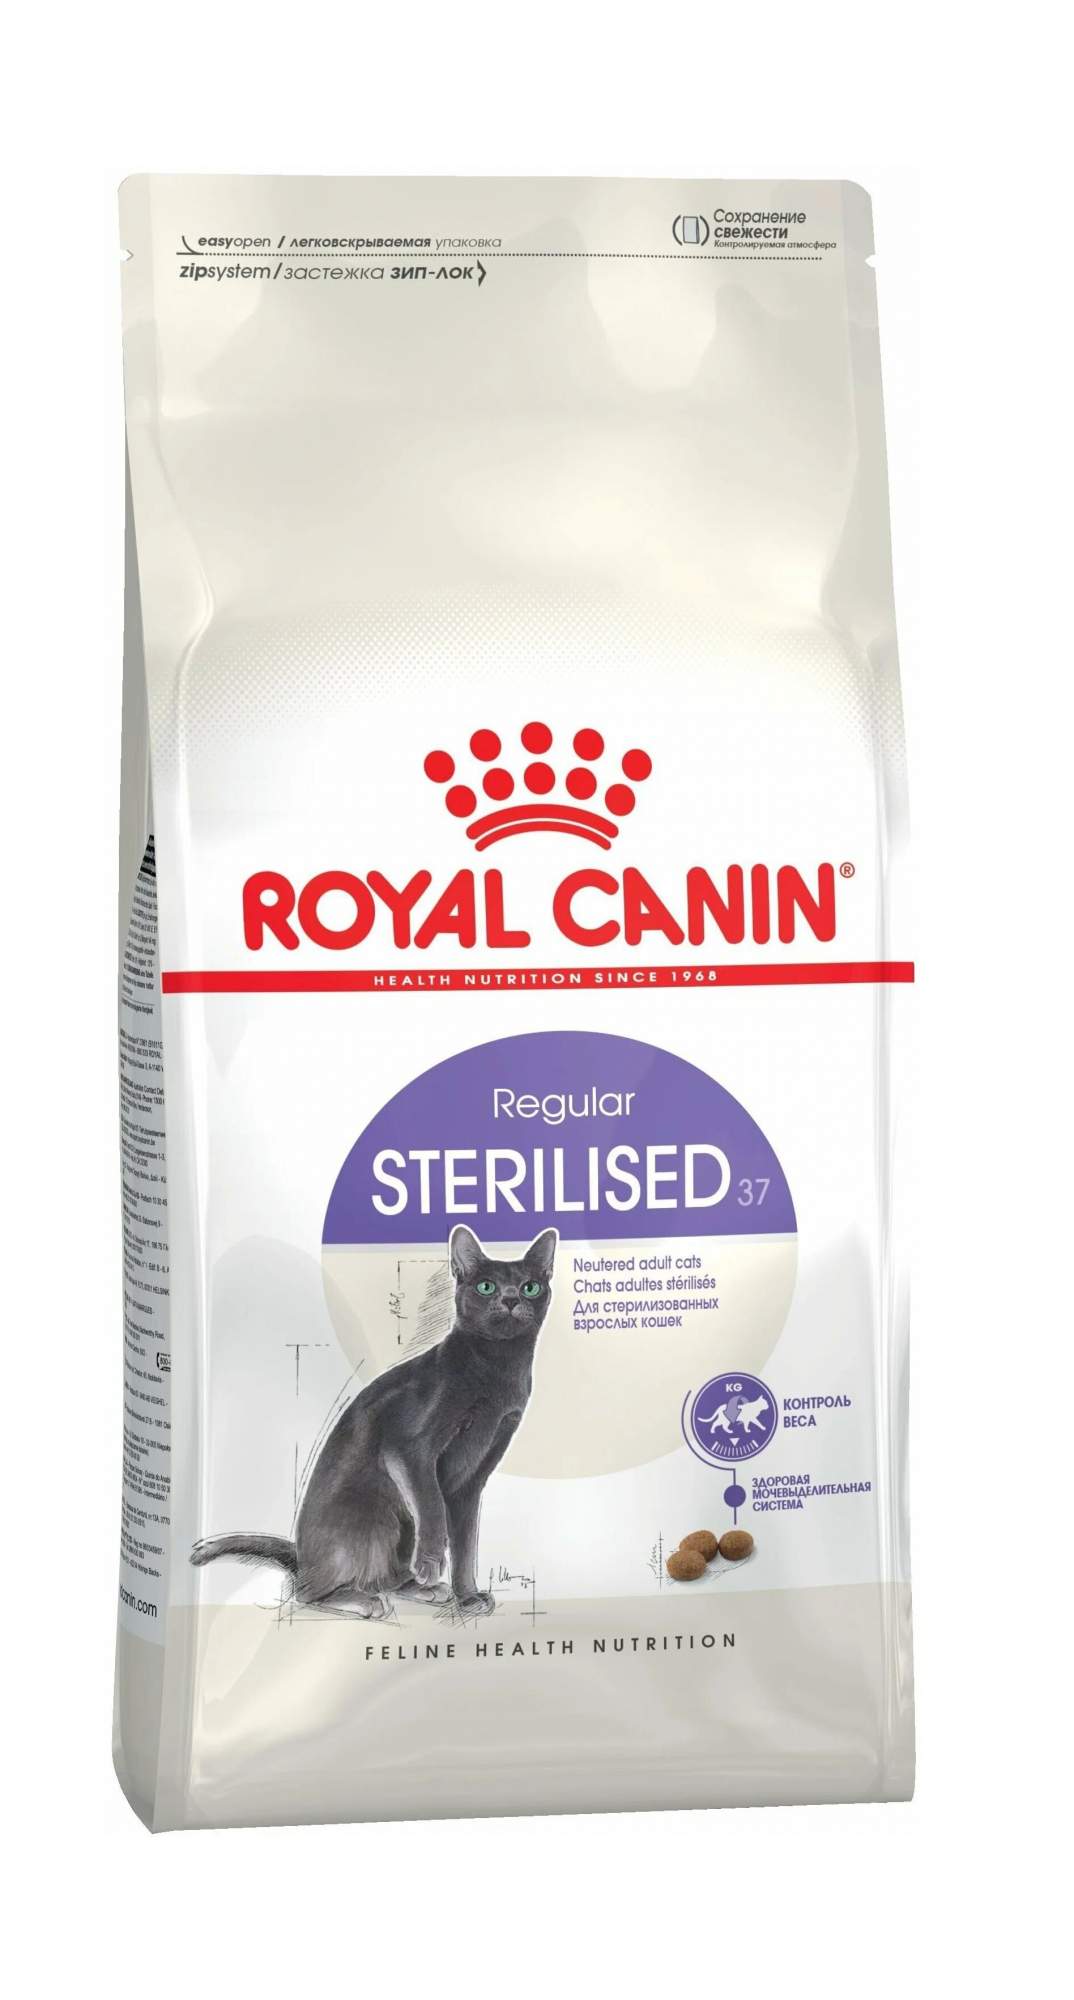 Купить сухой корм для кошек Royal Canin Sterilised 37, 1,2 кг, цены на Мегамаркет | Артикул: 100043979680